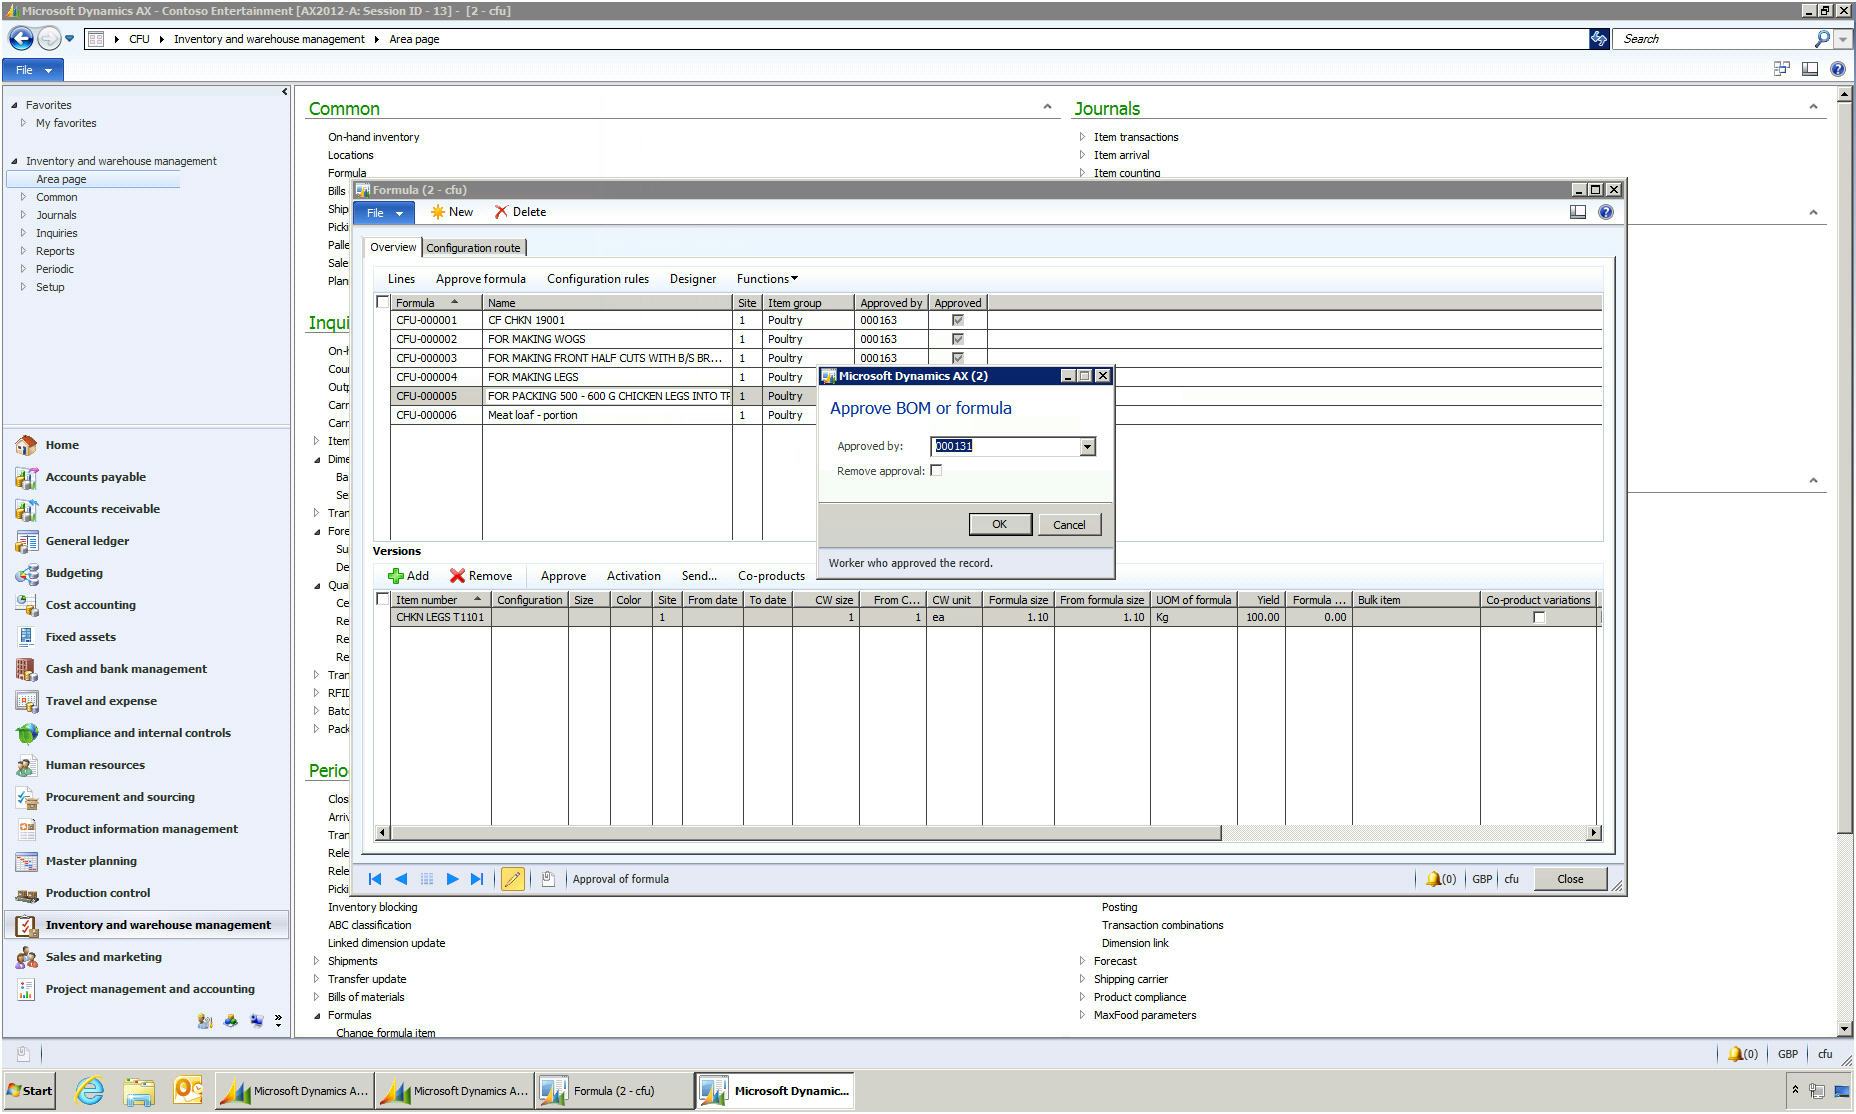 Microsoft Dynamics AX Software - Inventory management